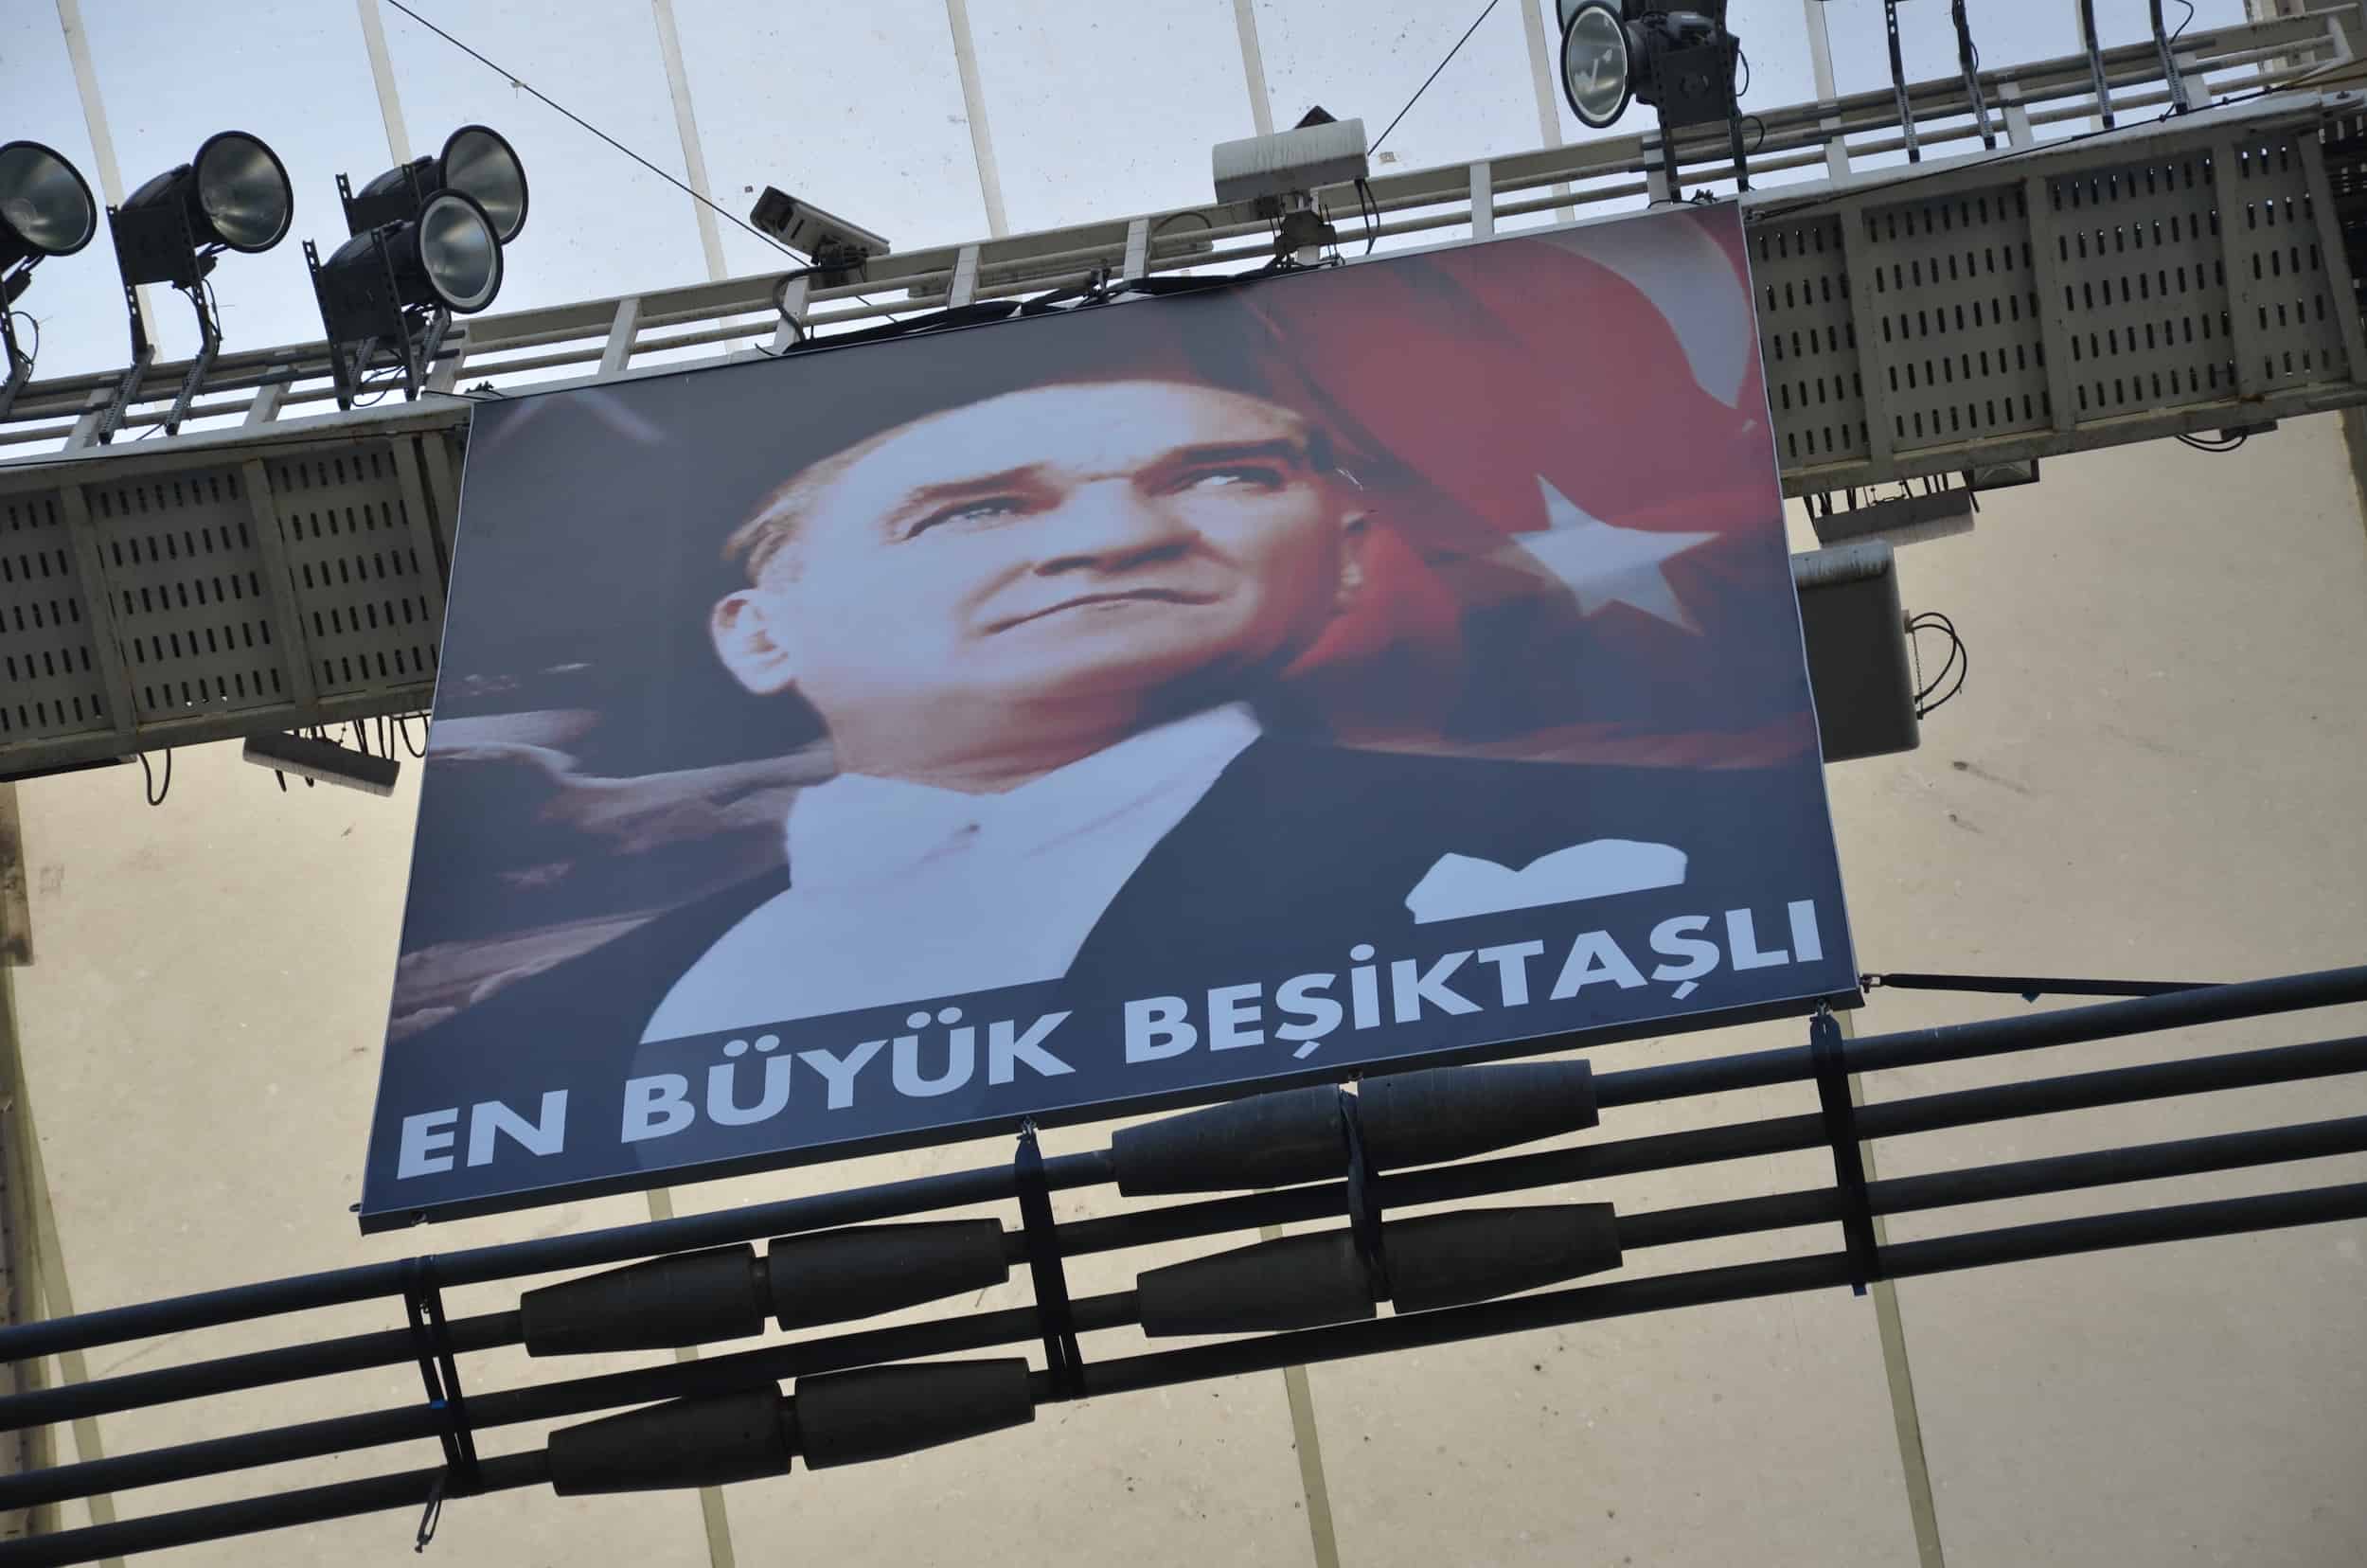 Atatürk banner at Beşiktaş Stadium in Istanbul, Turkey